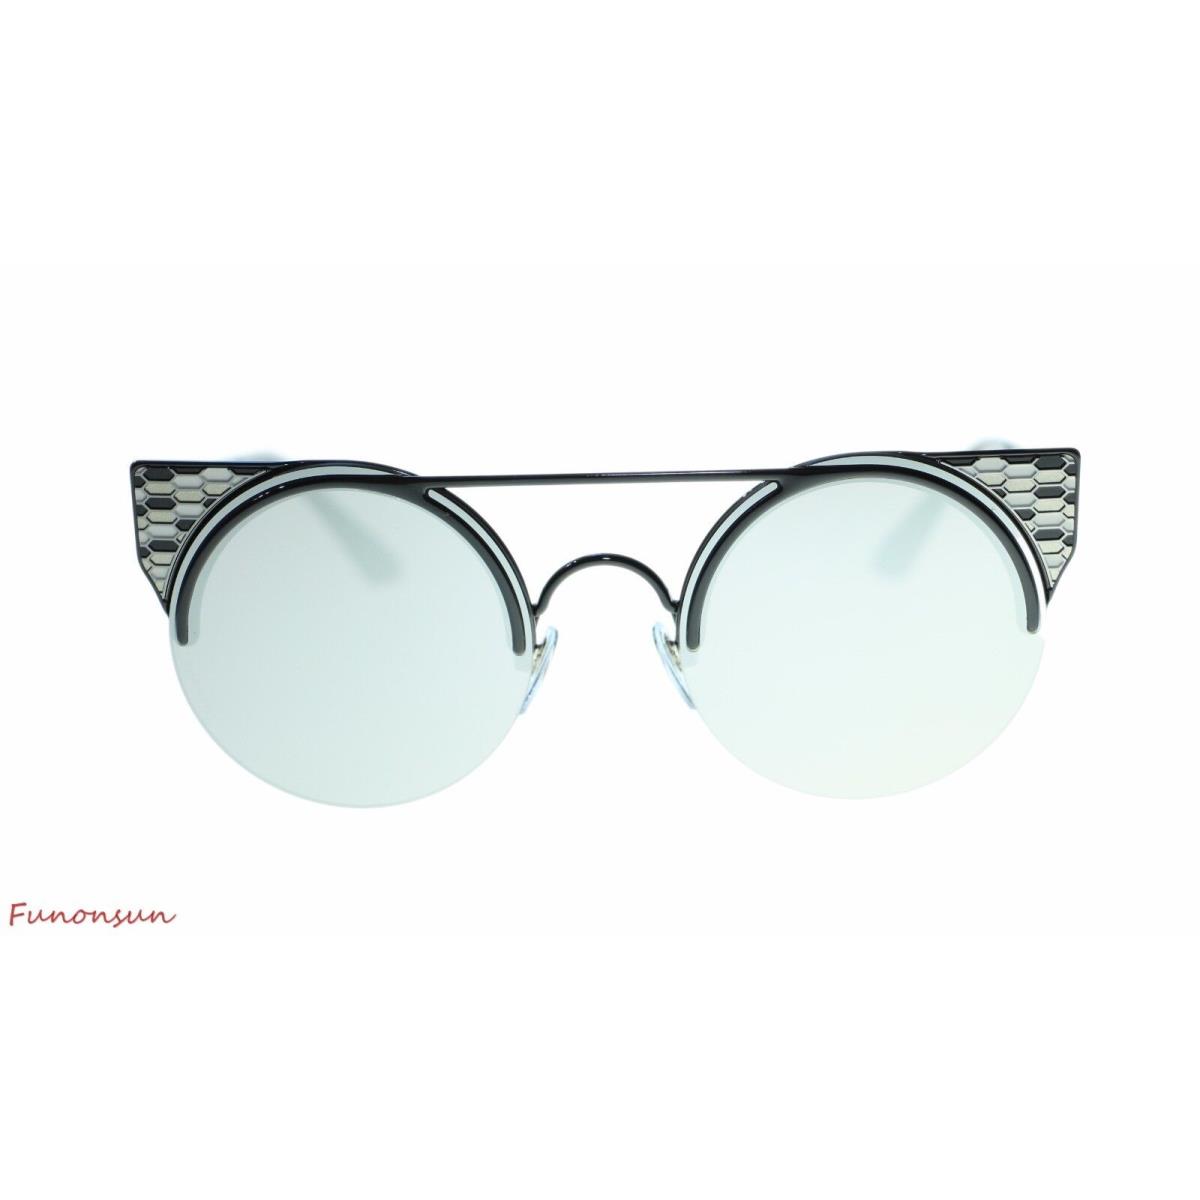 Bvlgari Women`s Round Sunglasses BV6088 2396G Black/grey Mirror Lens 54mm